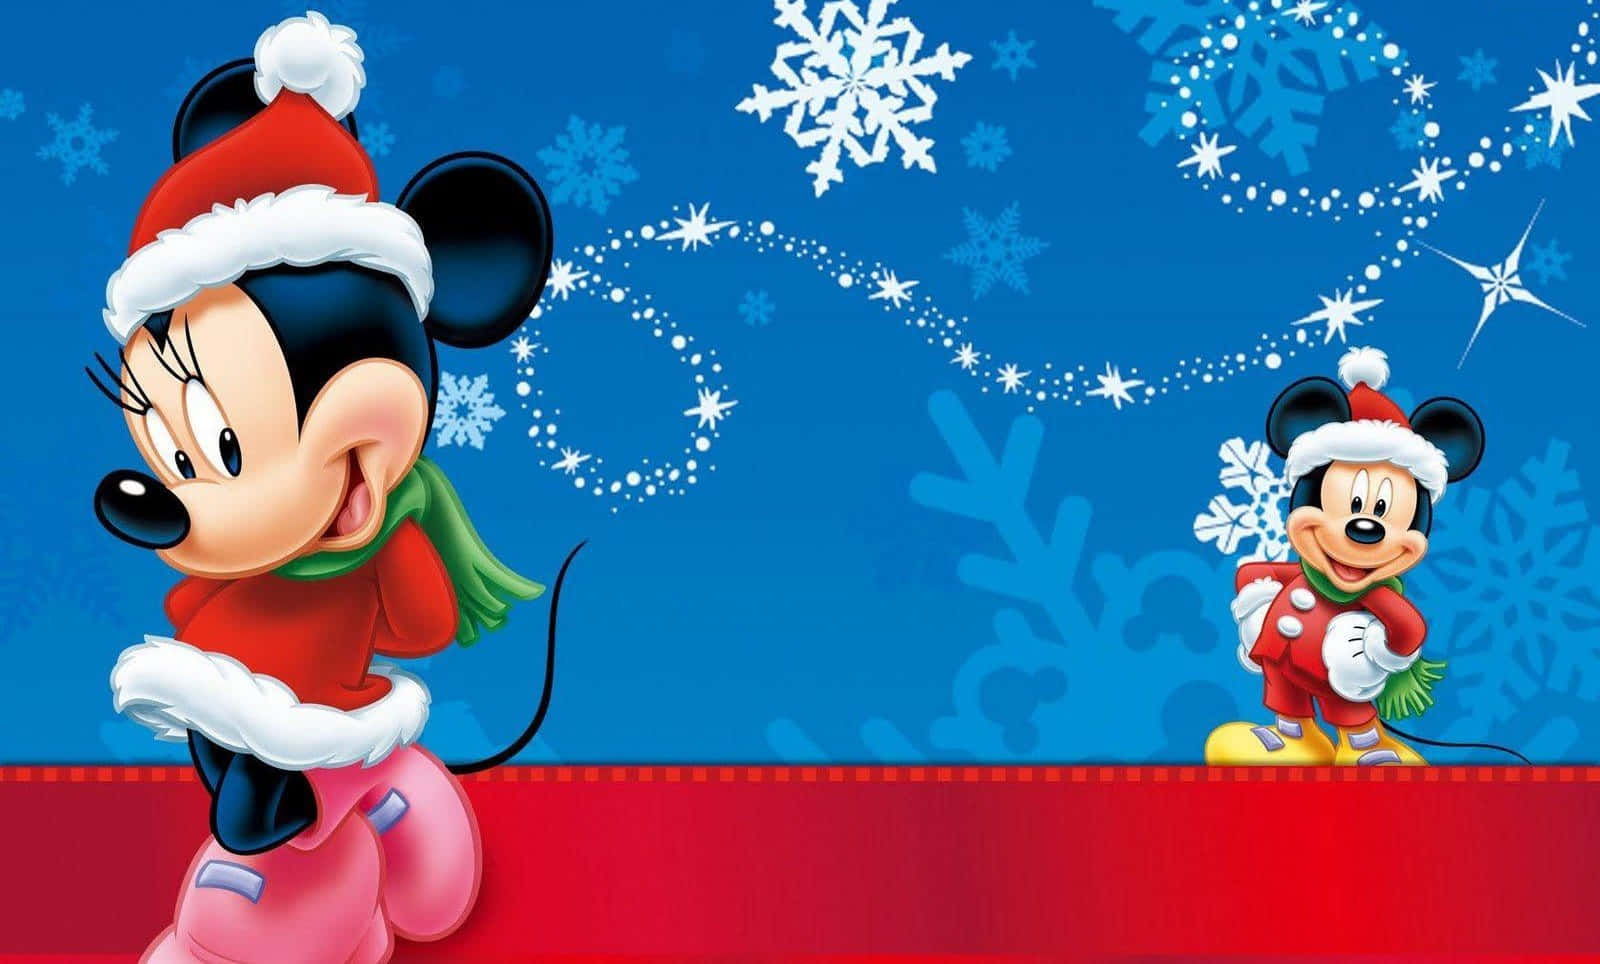 Mickey Mouse And Santa Claus In Santa Claus Hats